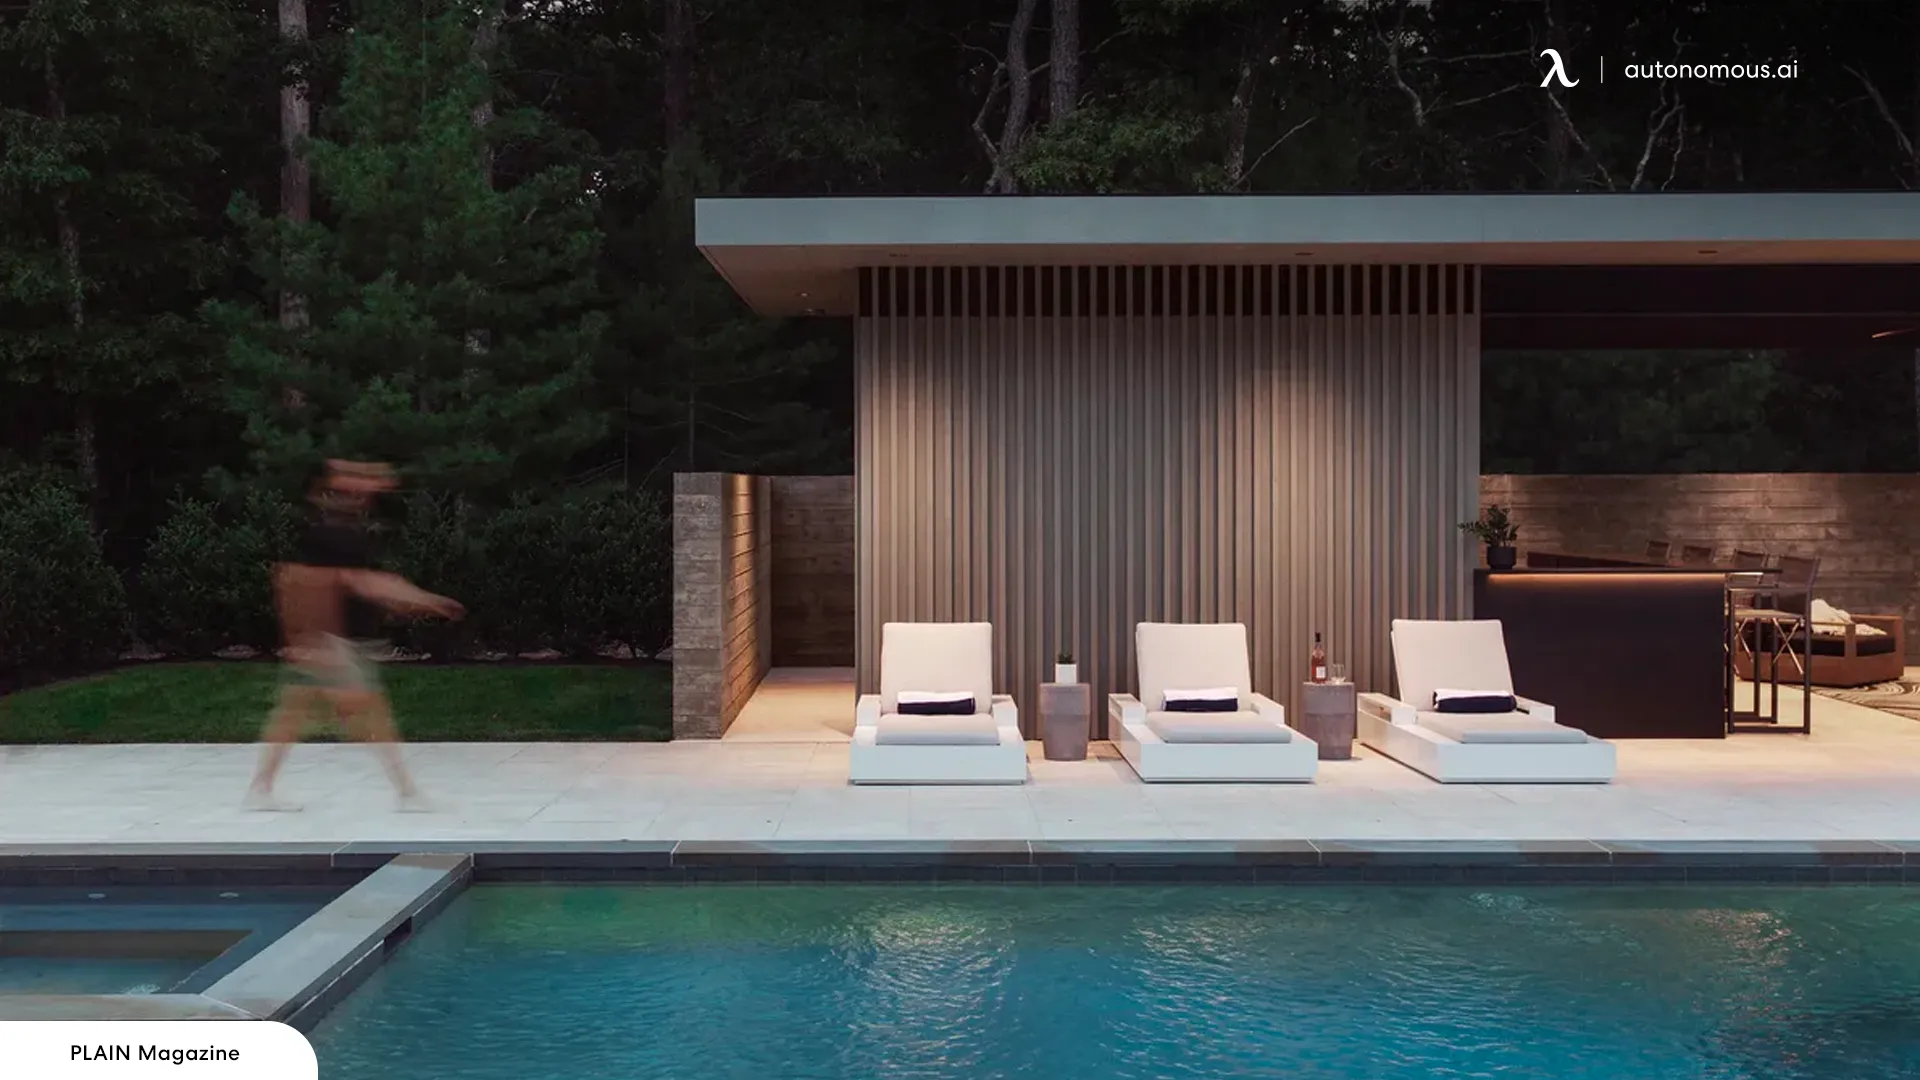 Backyard Cabana Inspiration for Your Ultimate Outdoor Oasis